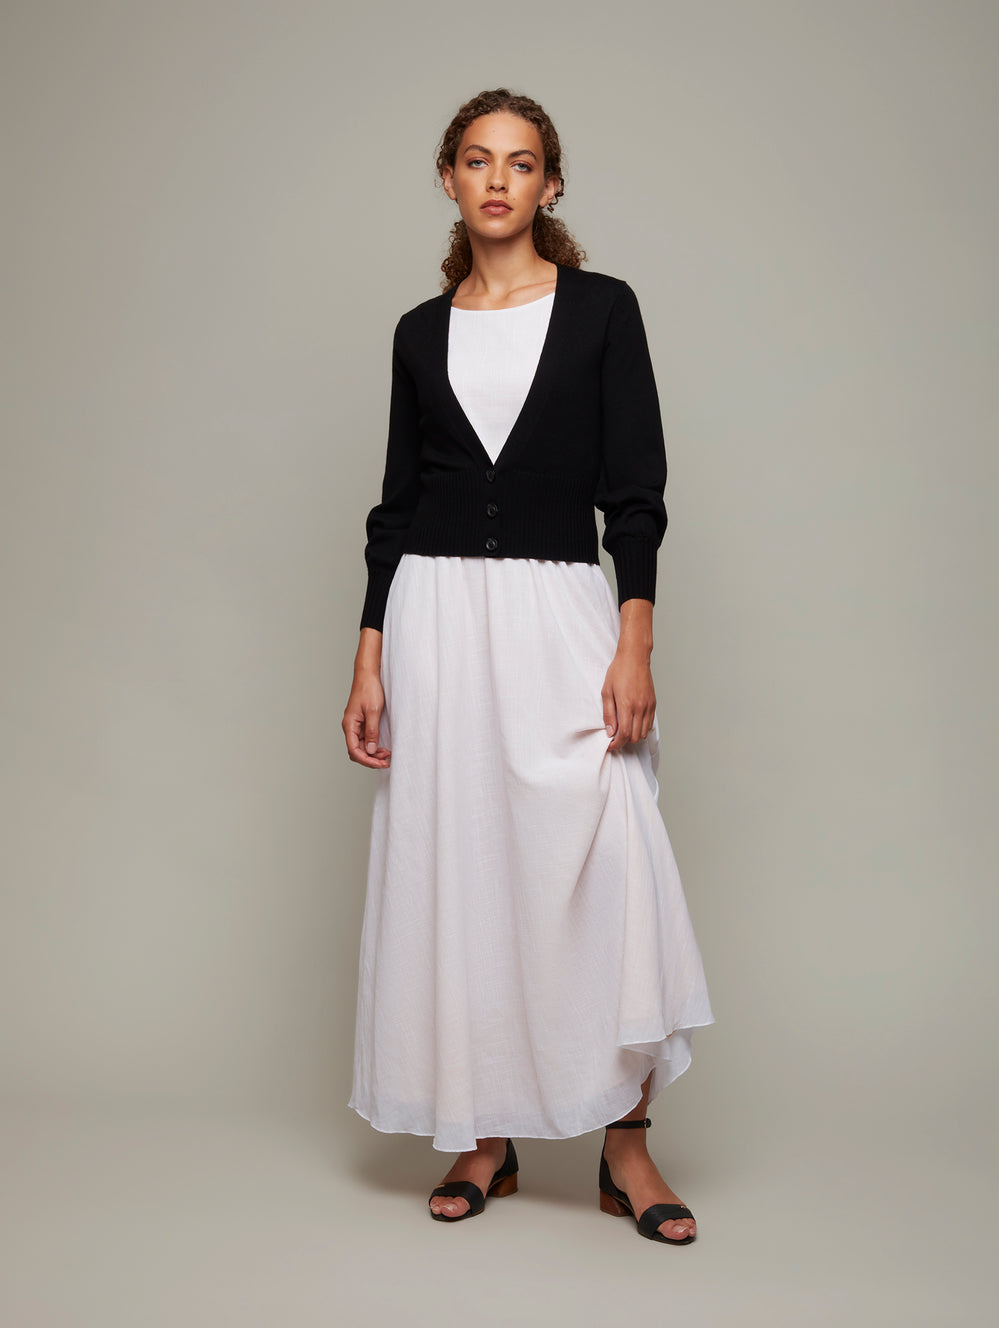 DEPLOY womenswear black fine merino knit deep-v cardigan front view